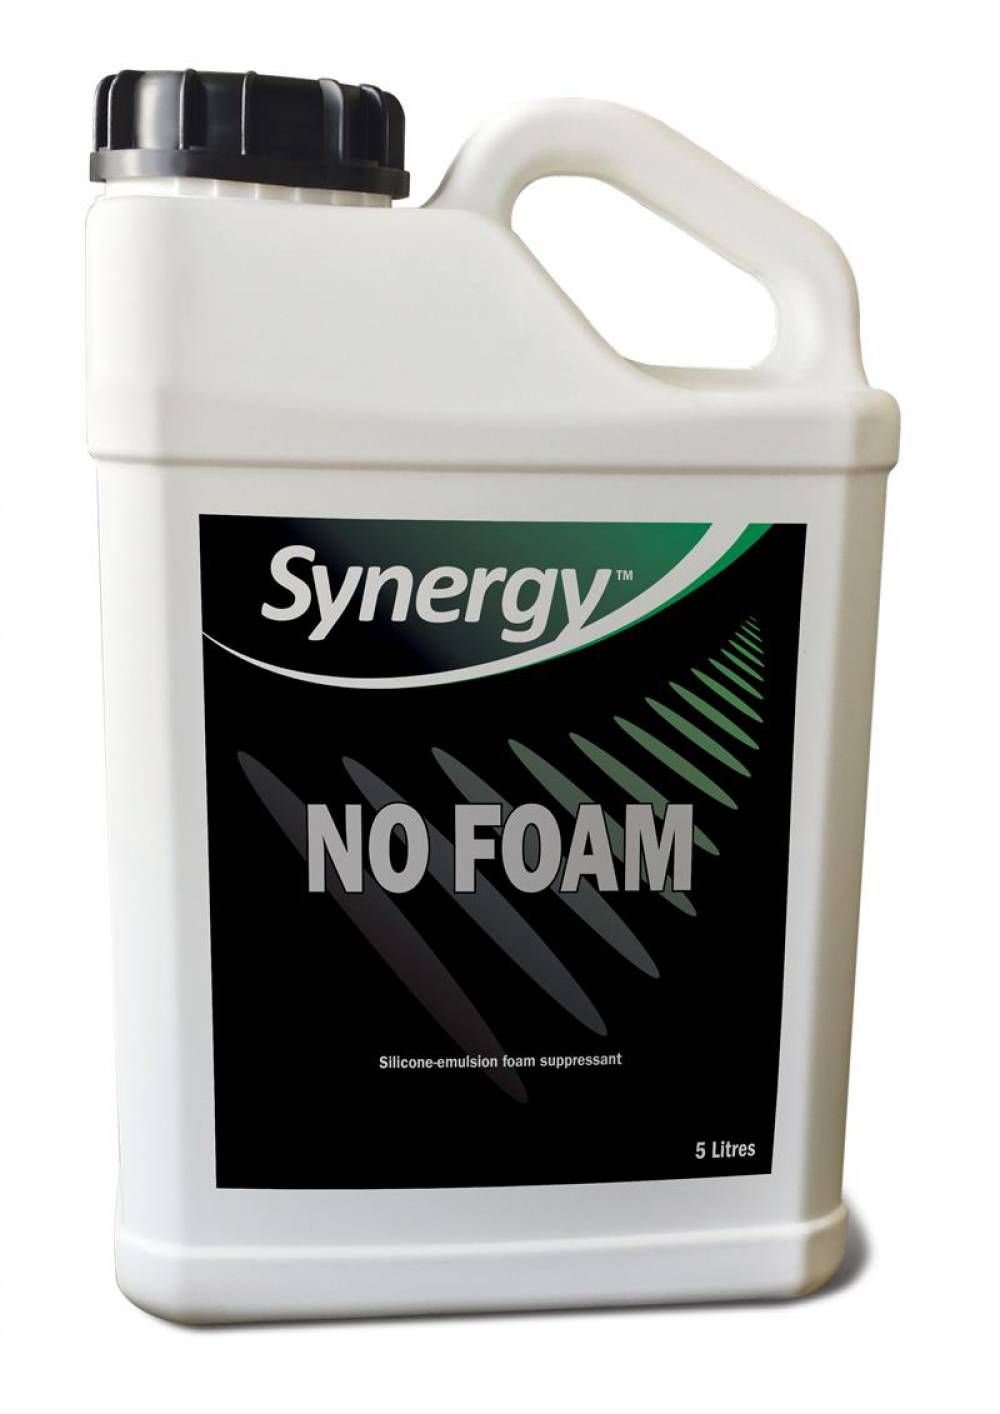 Synergy™ No Foam